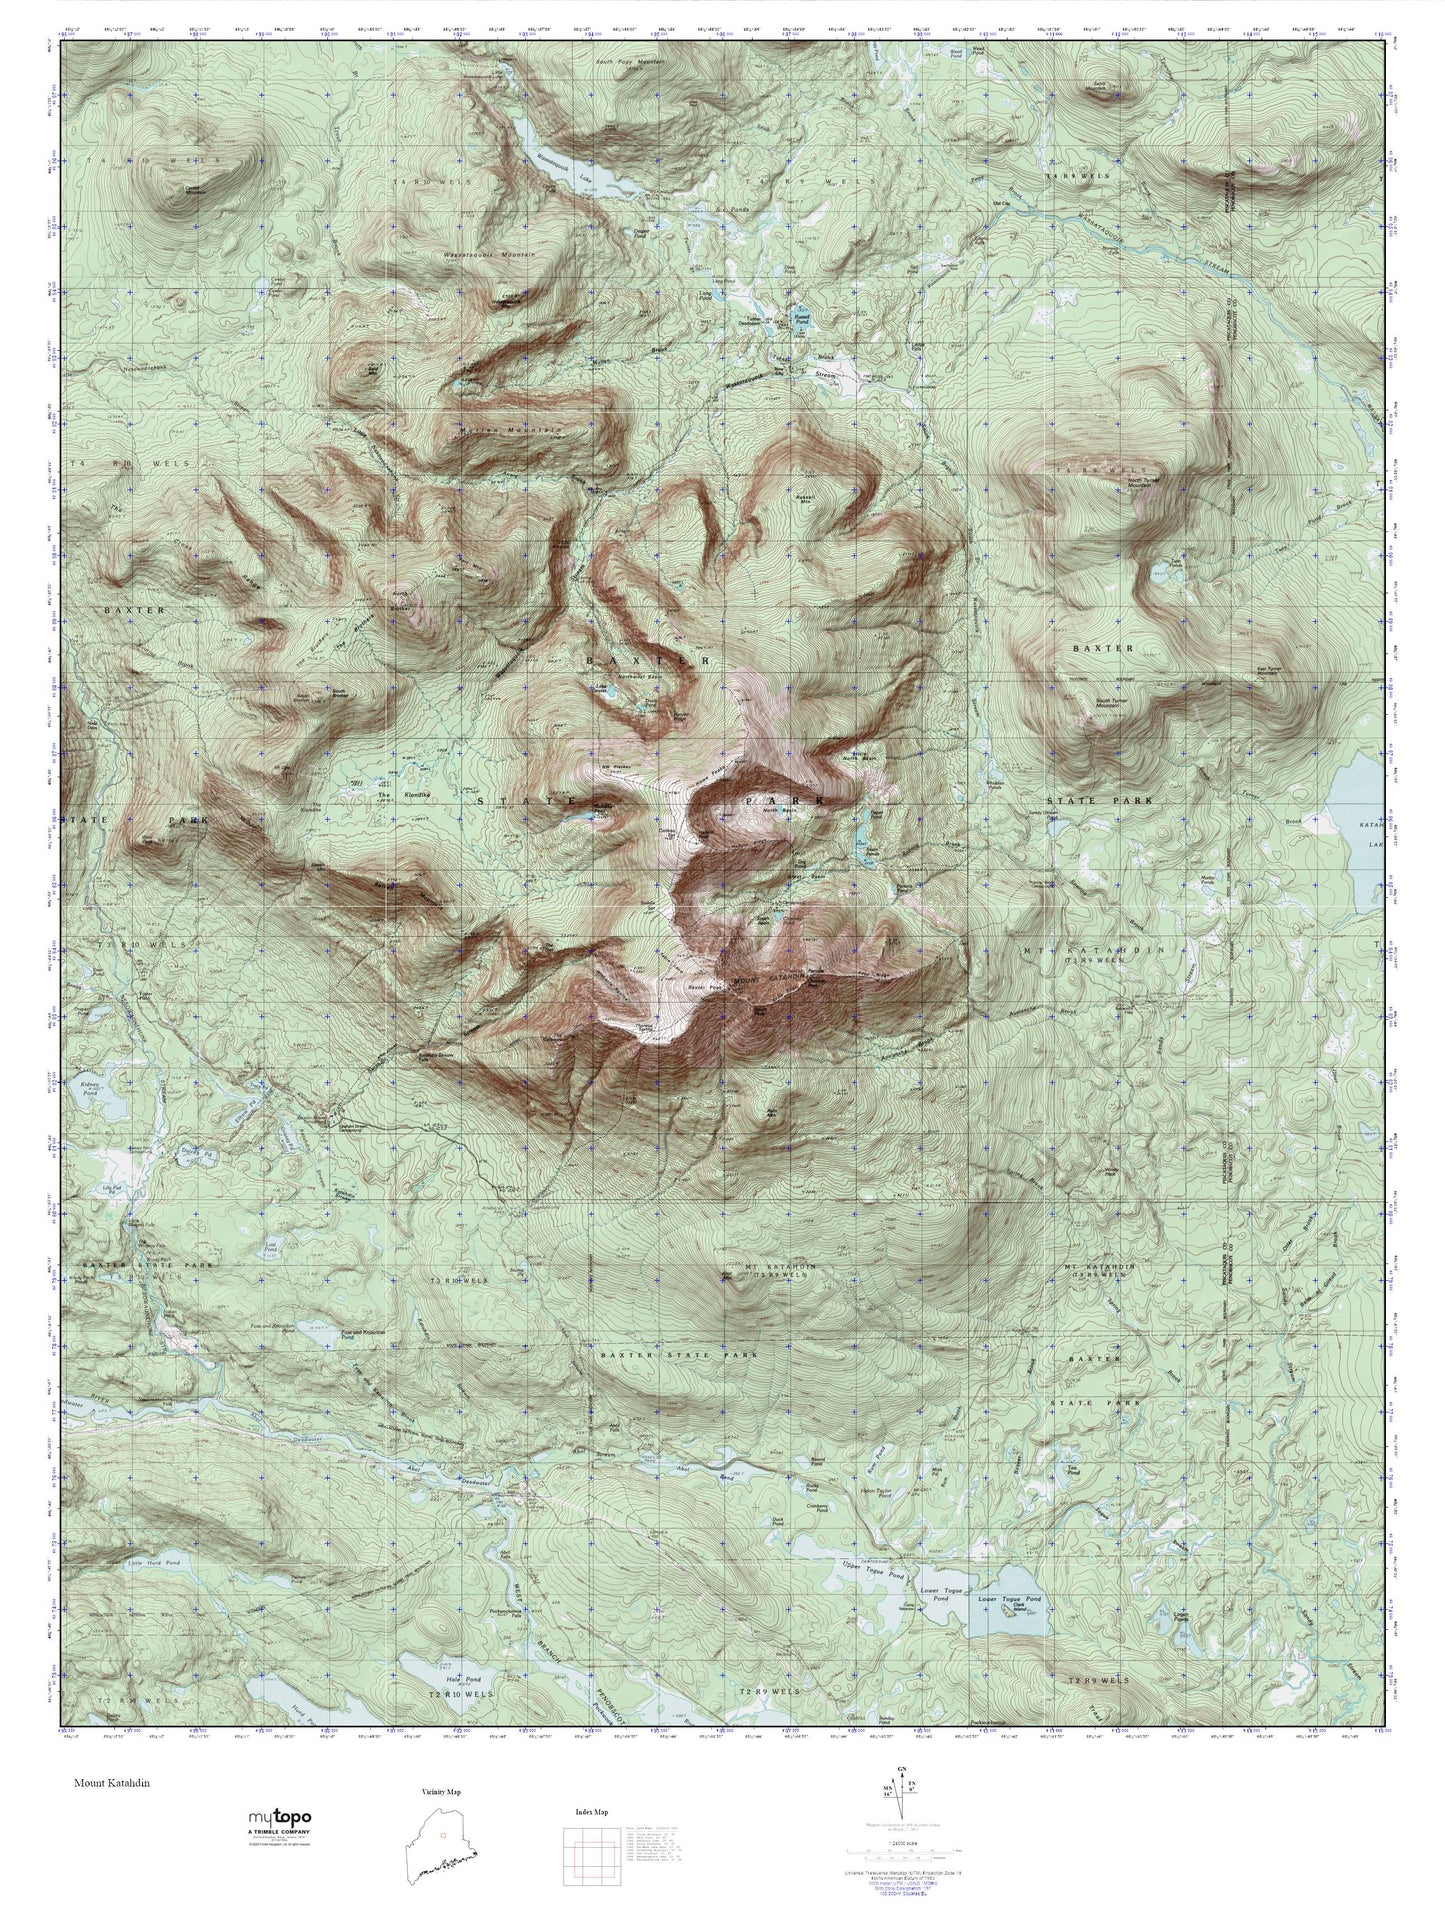 Mount Katahdin MyTopo Explorer Series Map Image